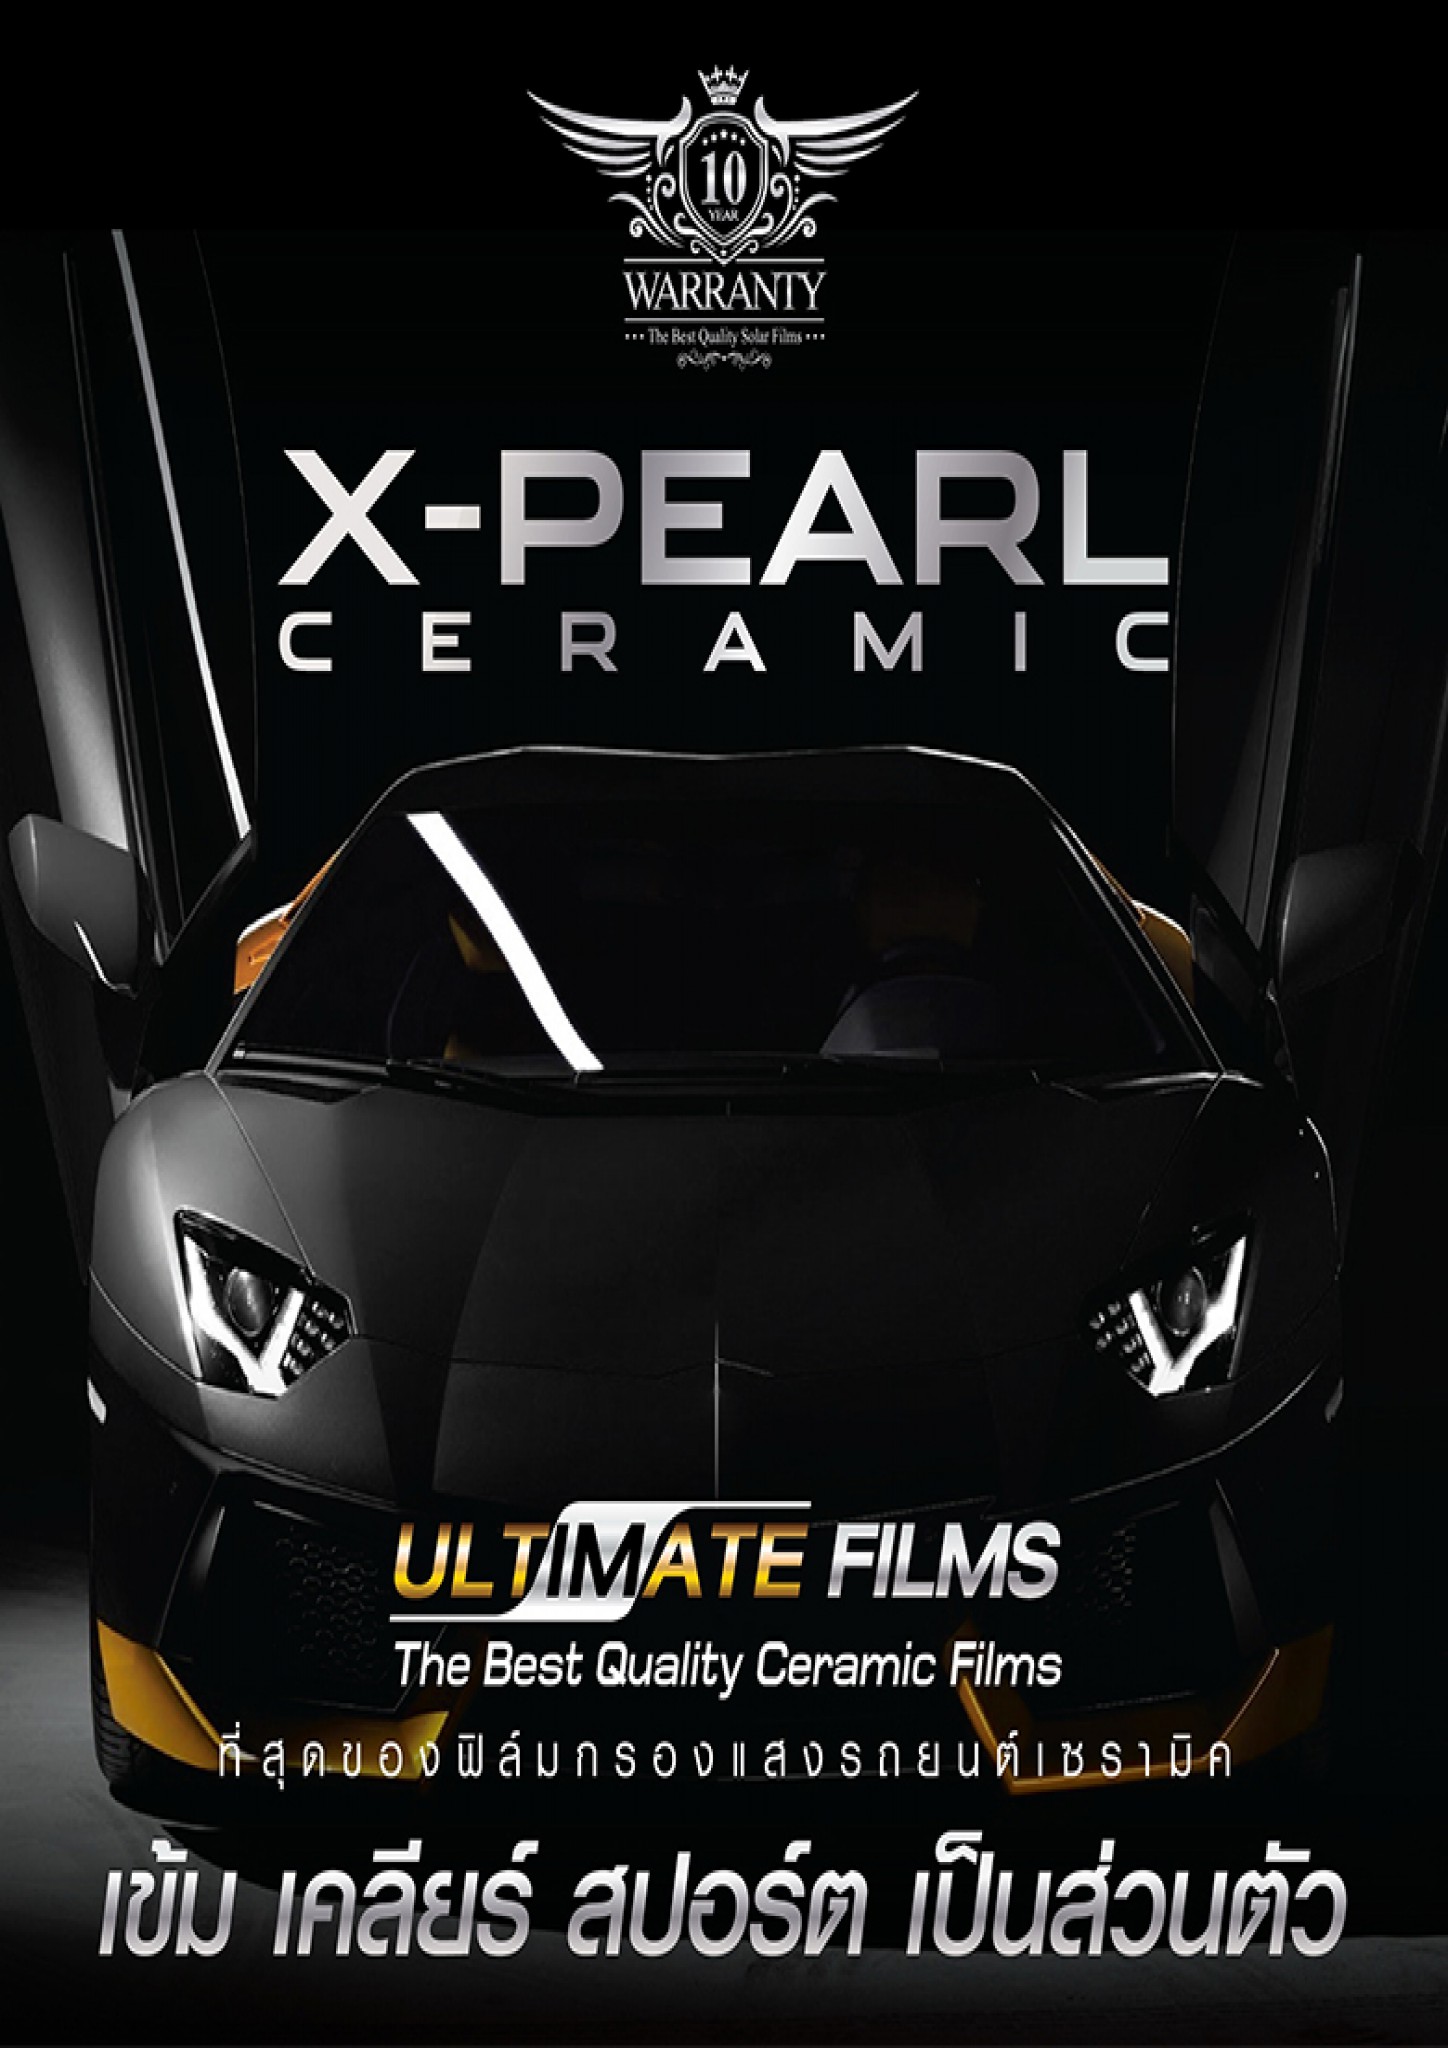 X-PEARL CERAMIC